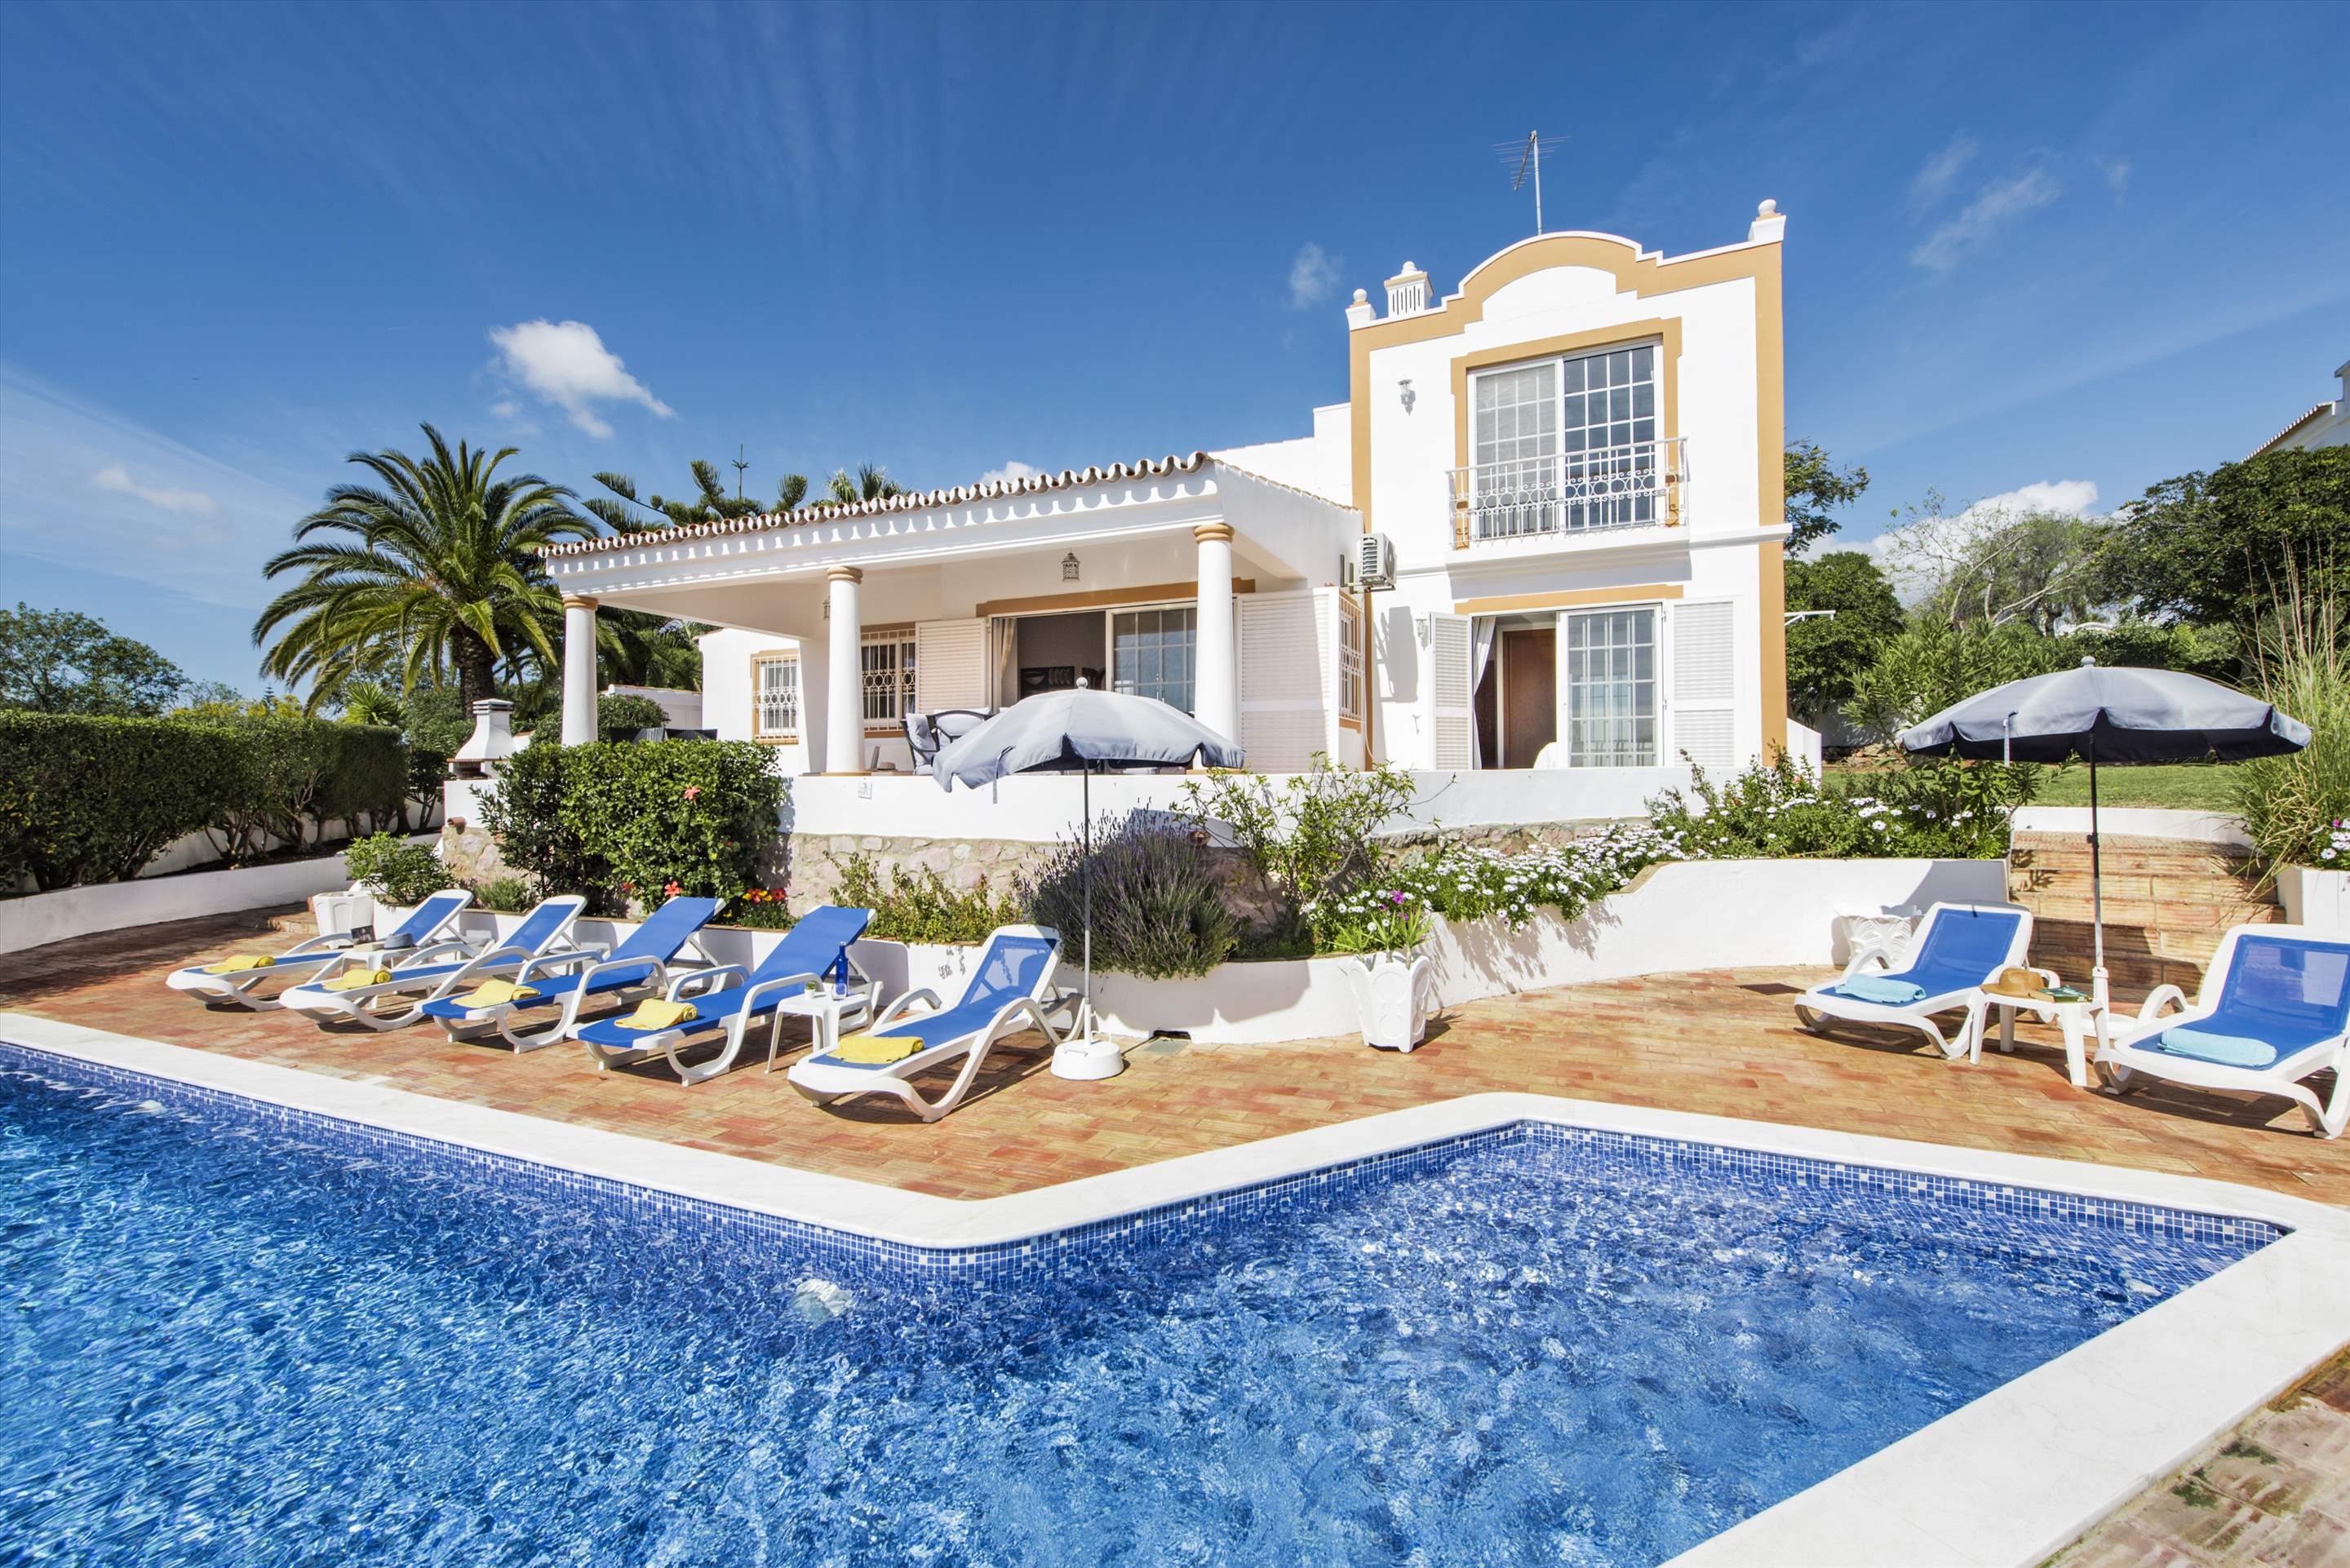 Villa Buganvilia, 3 bedroom villa in Gale, Vale da Parra and Guia, Algarve Photo #1